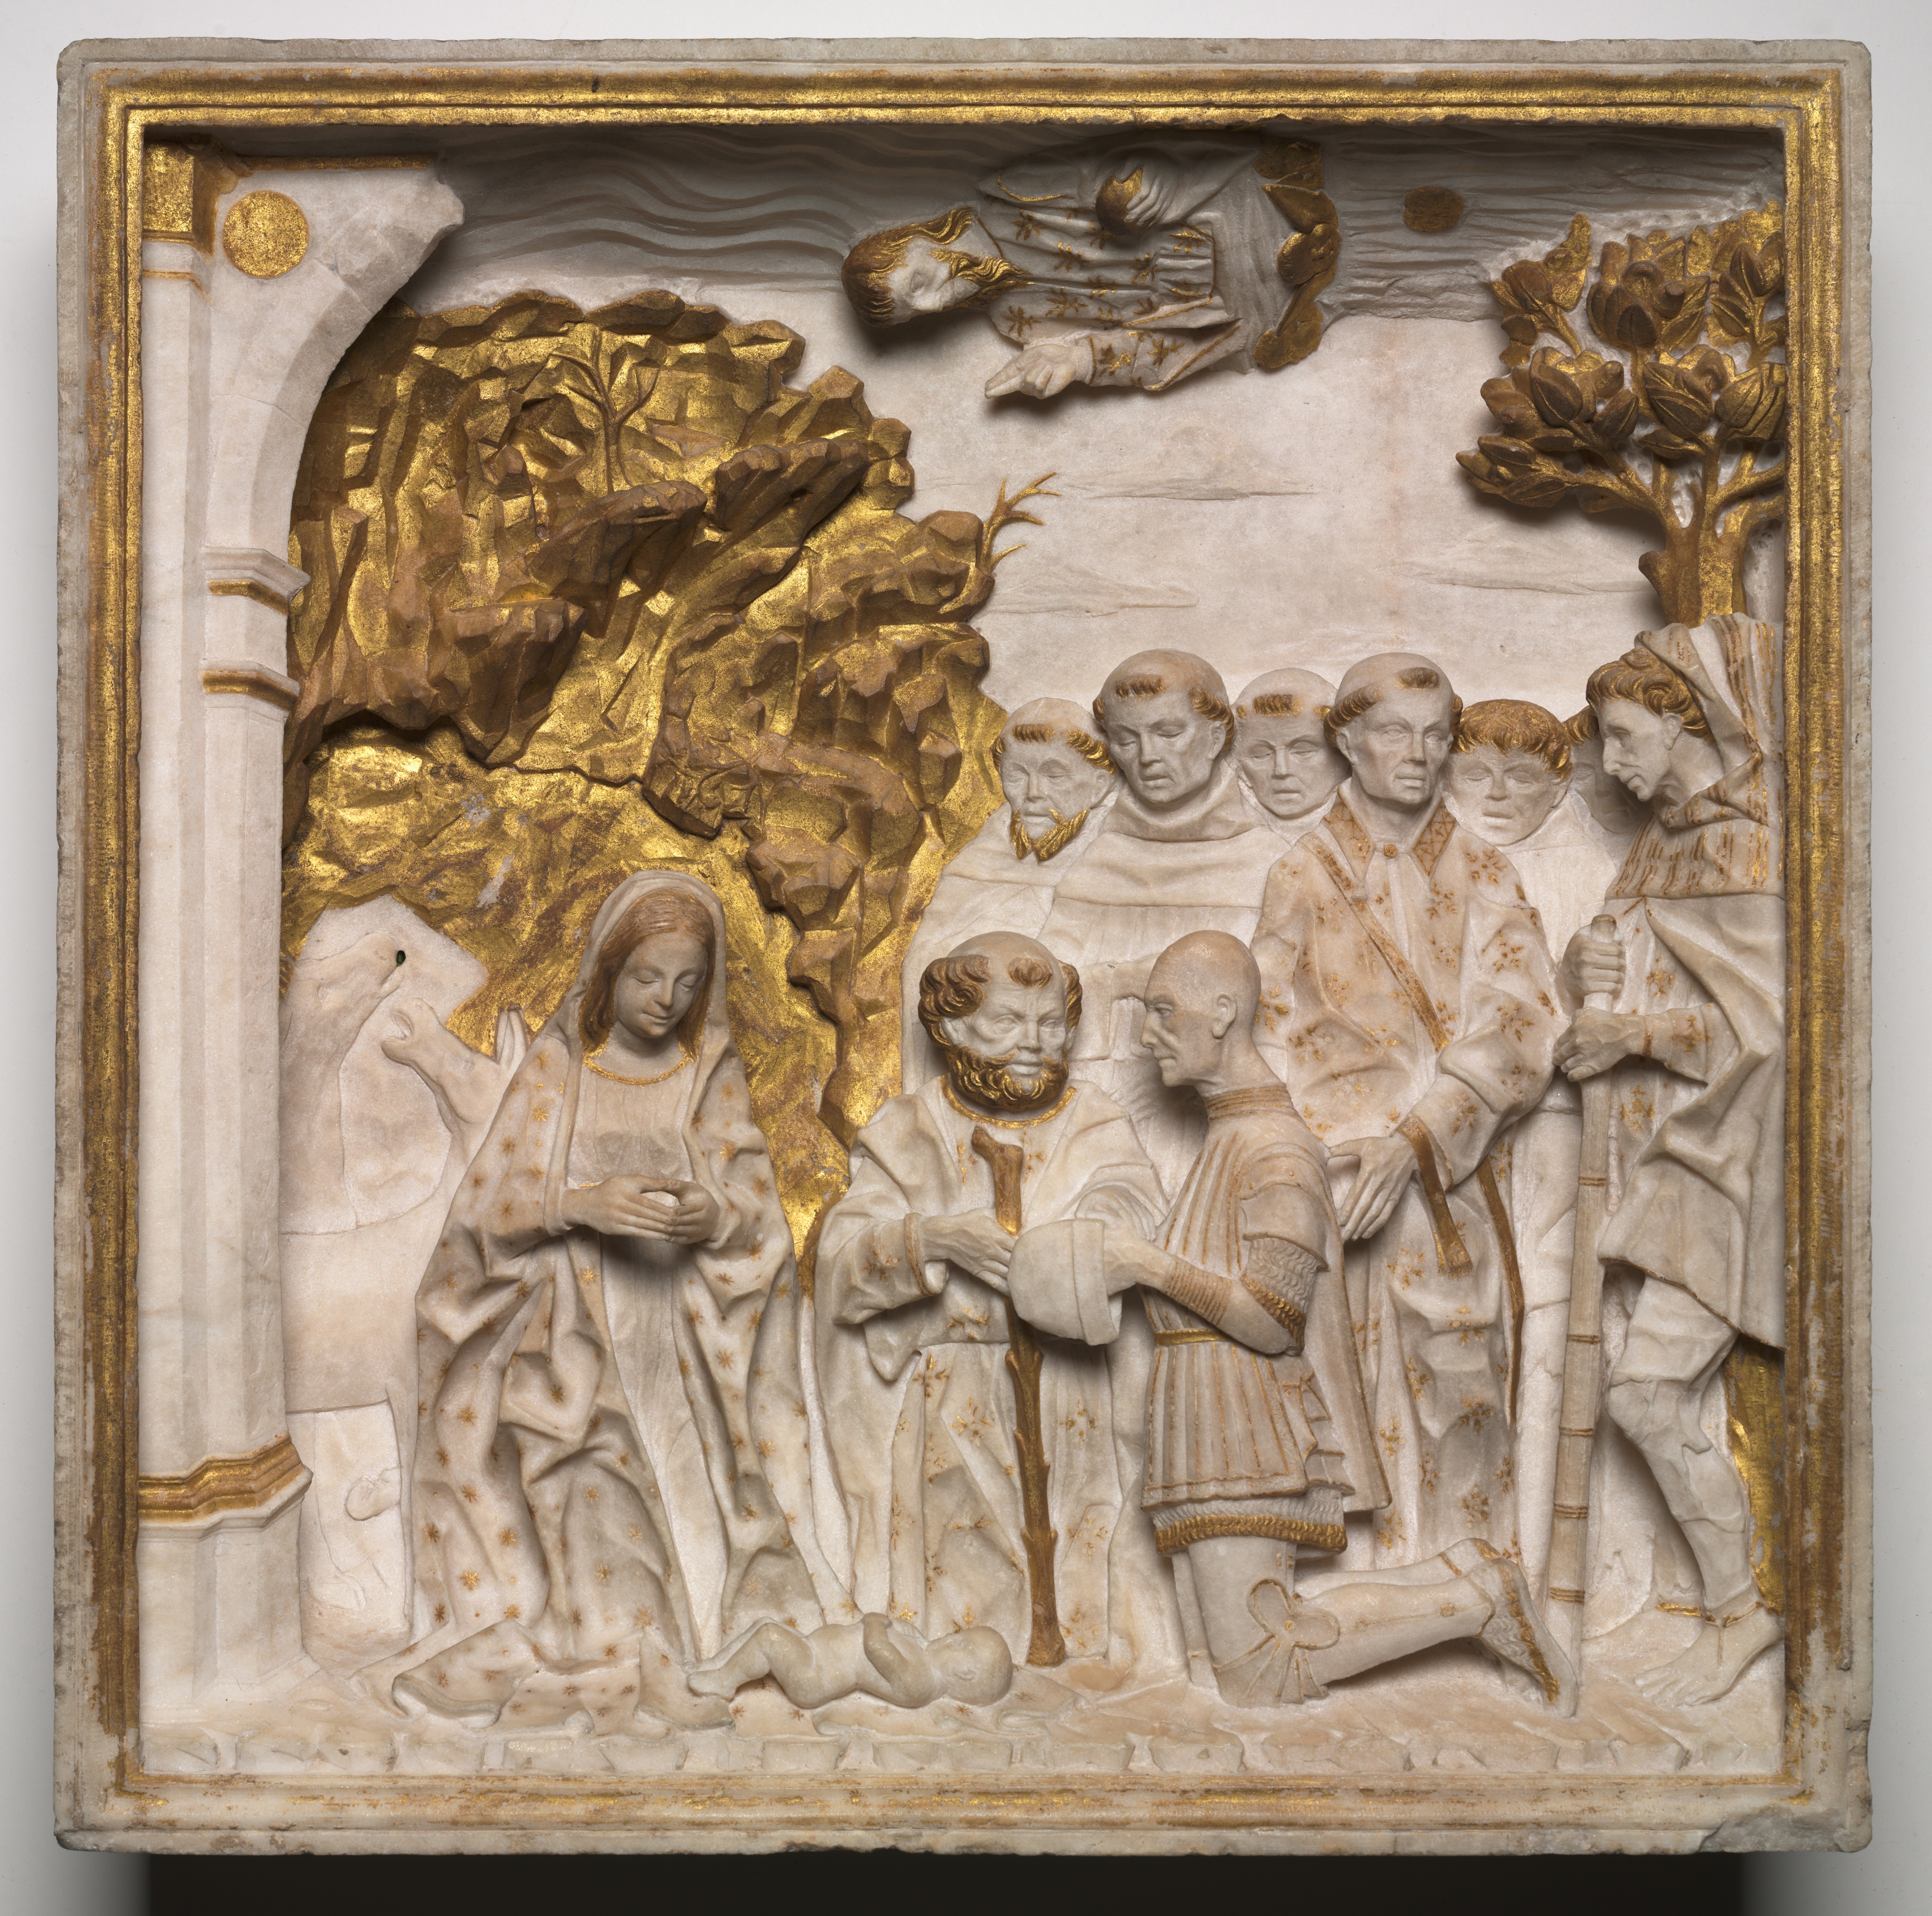 Pier Francesco Visconti, Court of Saliceto, Adoring the Christ Child